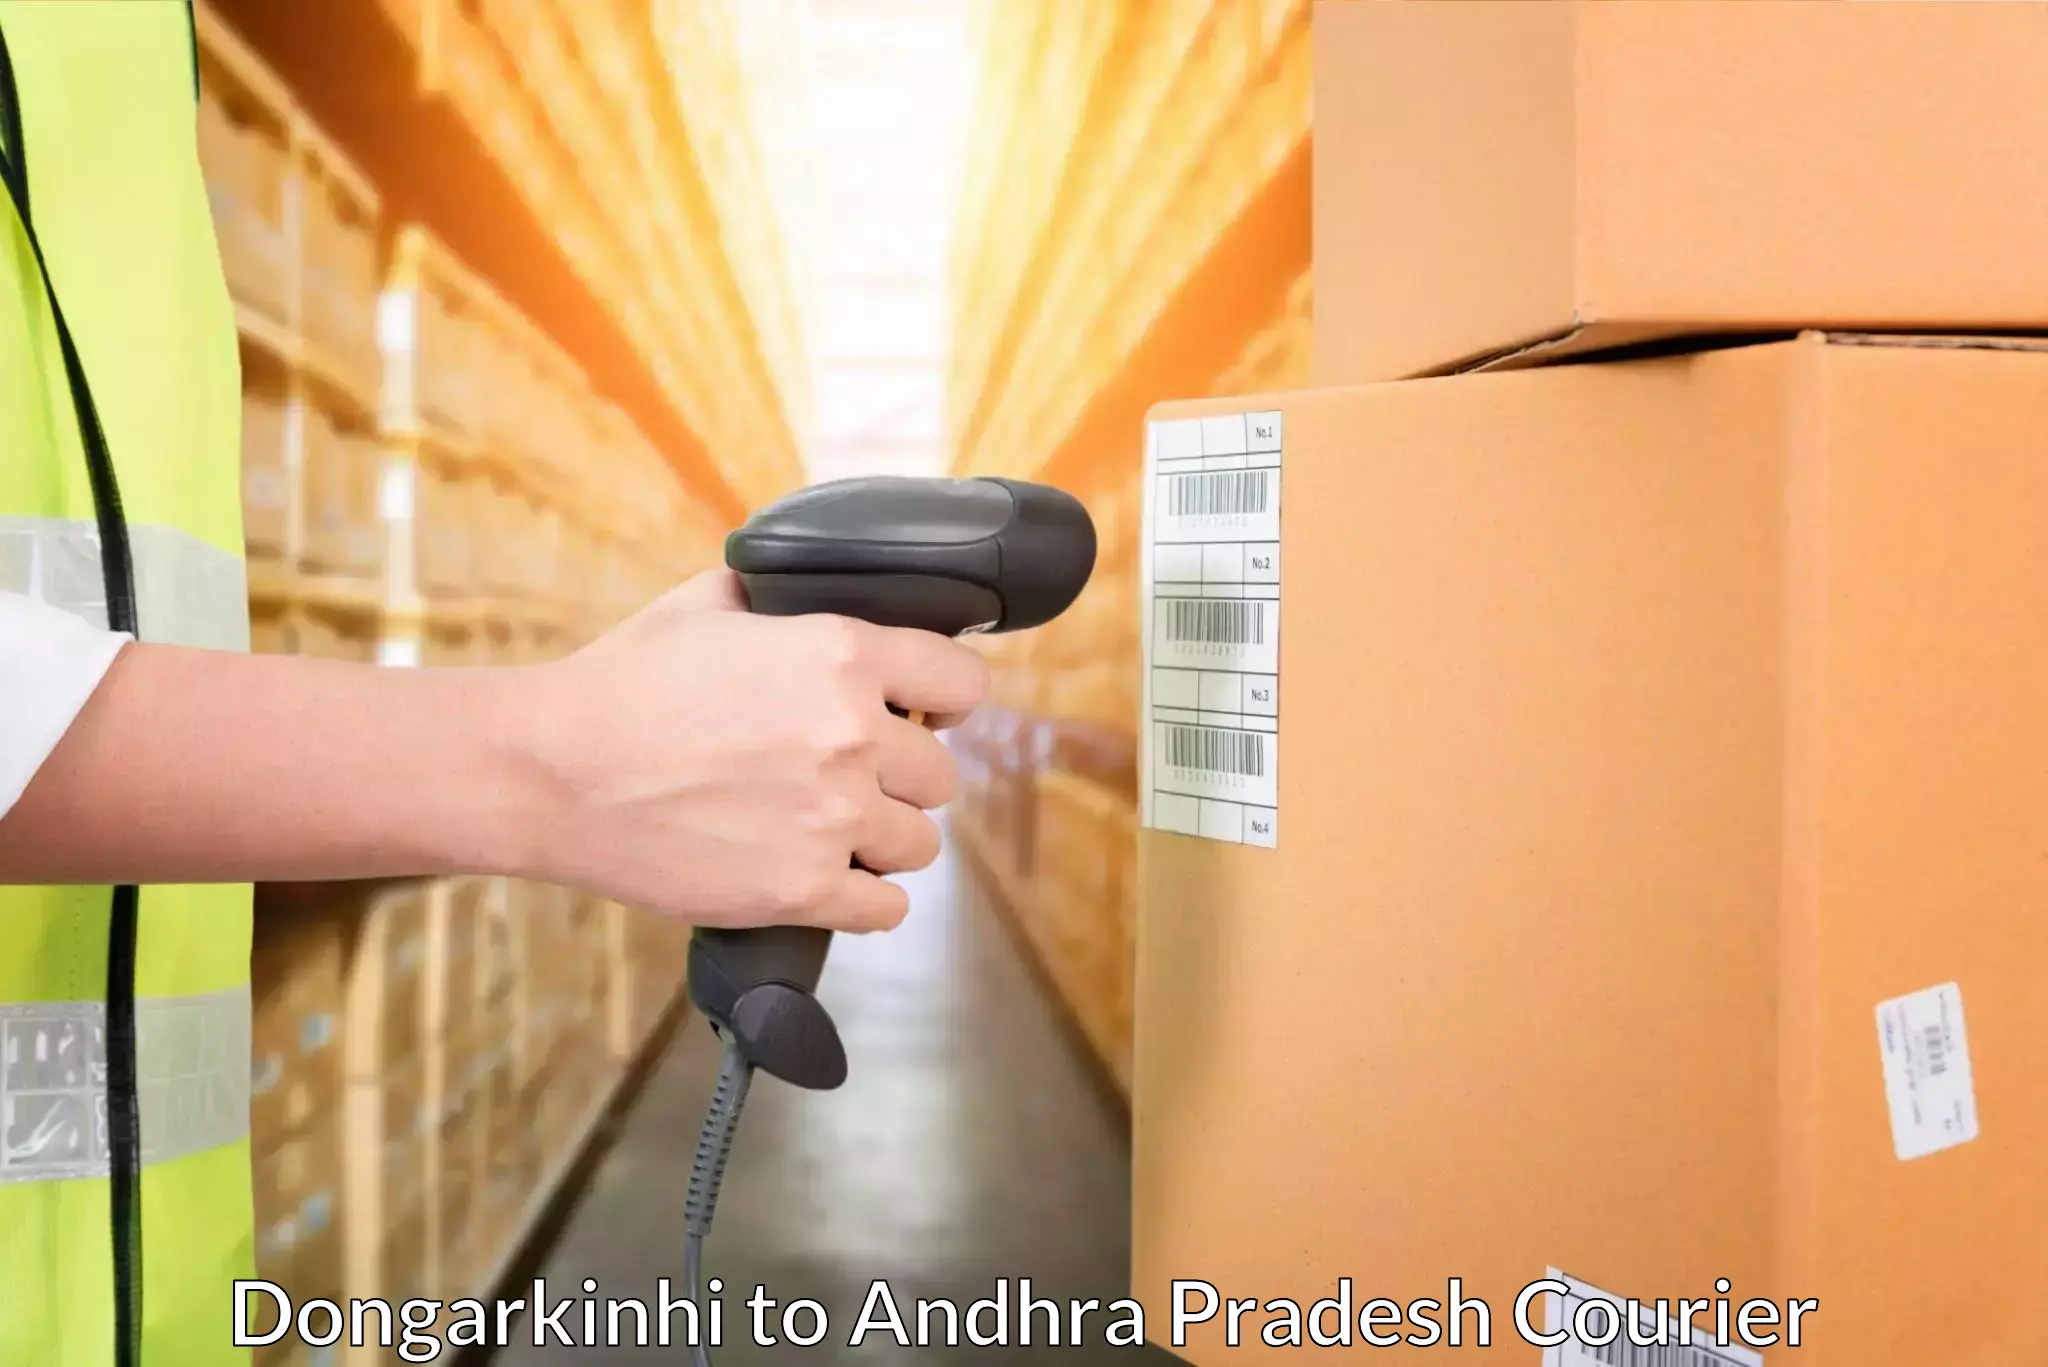 Customizable delivery plans Dongarkinhi to Naupada